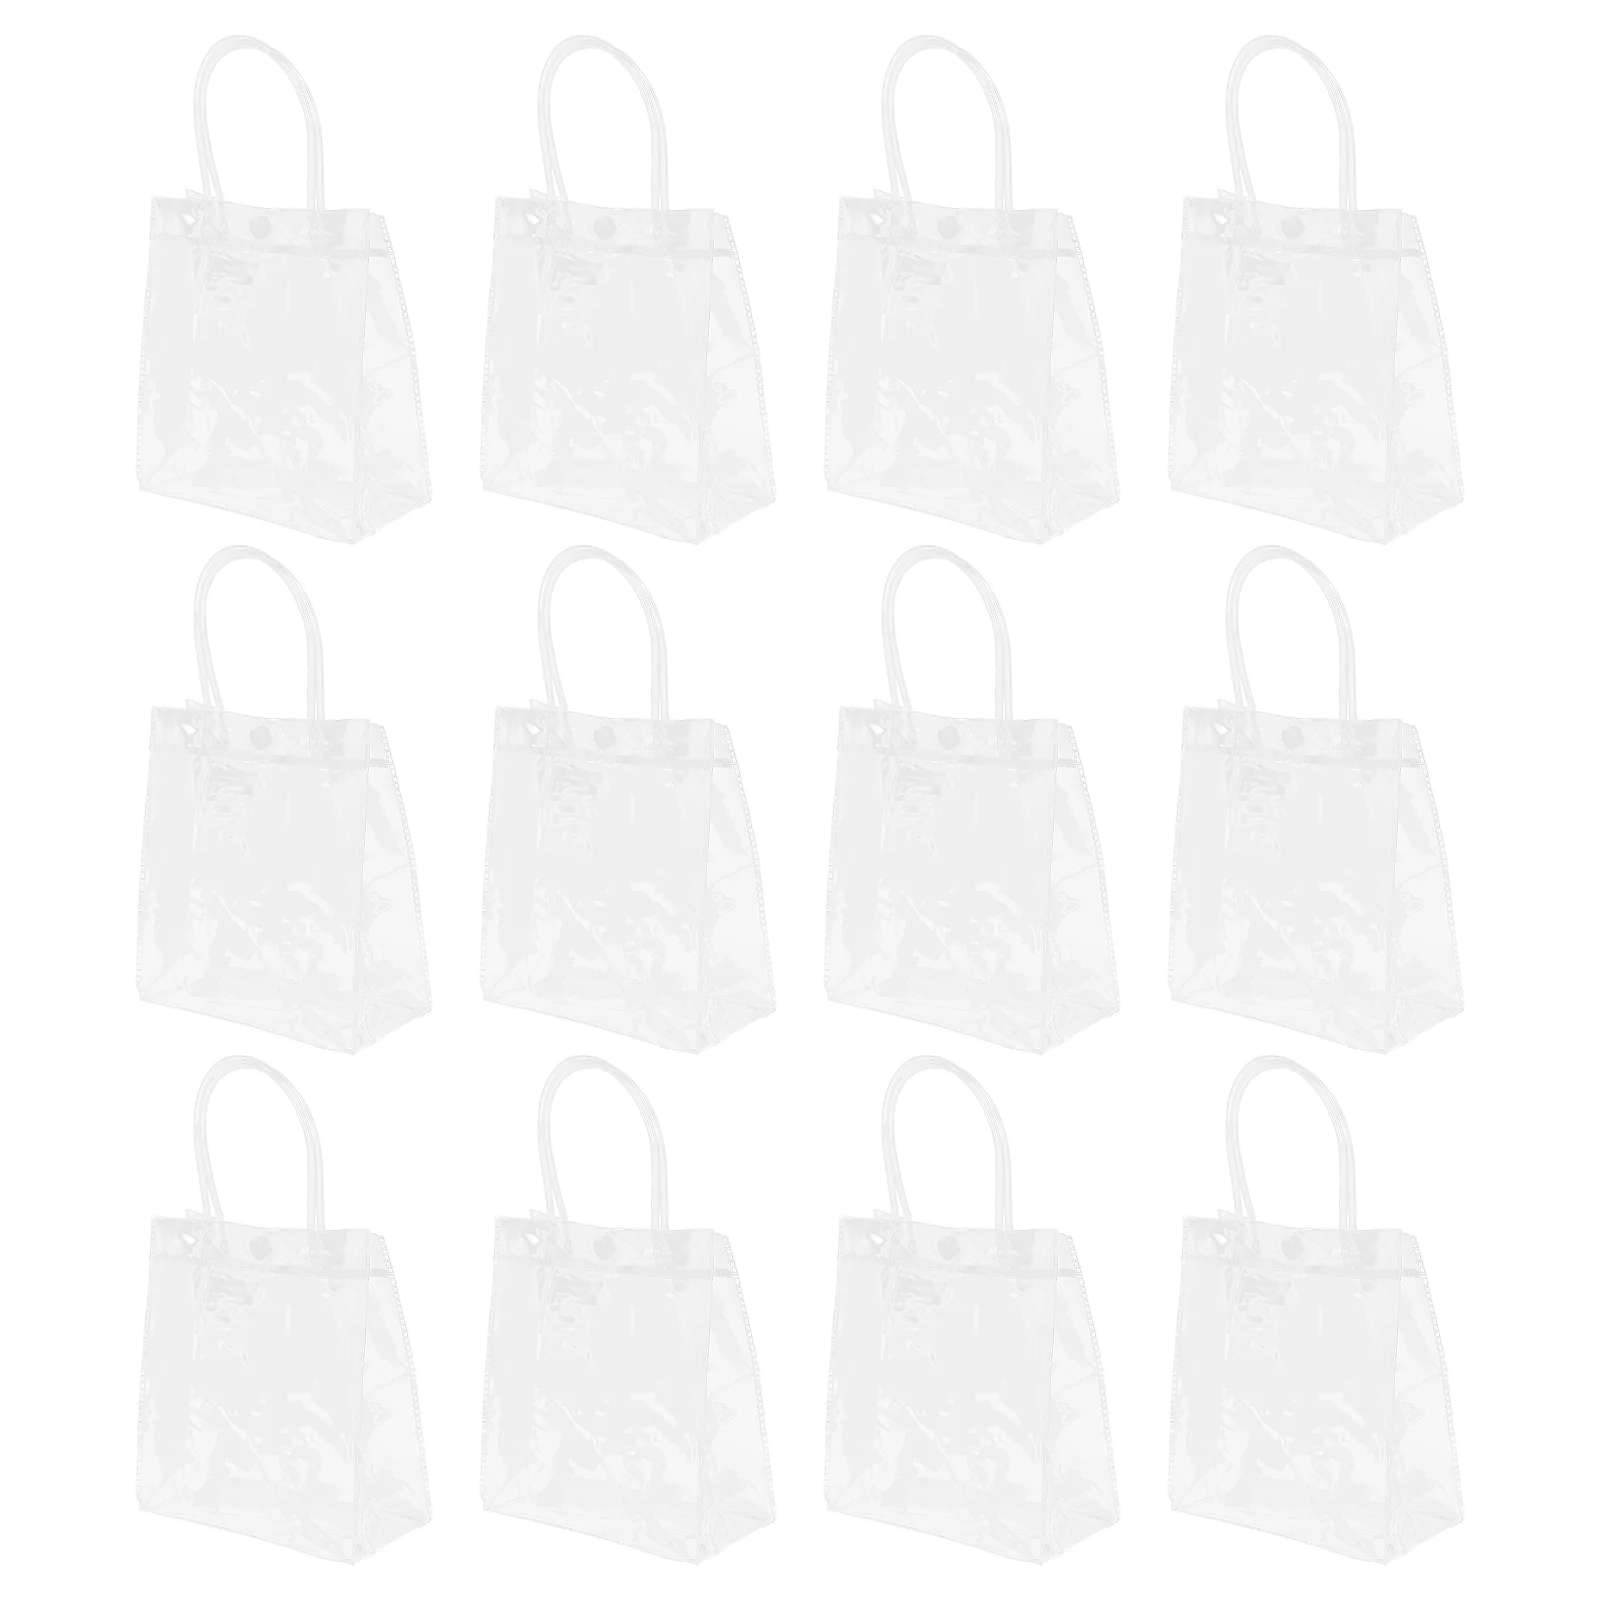 

Bags Gift Clear Bag Tote Transparent Pvc Partyreusable Wrap Favorgoodie Handles Merchandise Handle Favors Treats Treat Candy